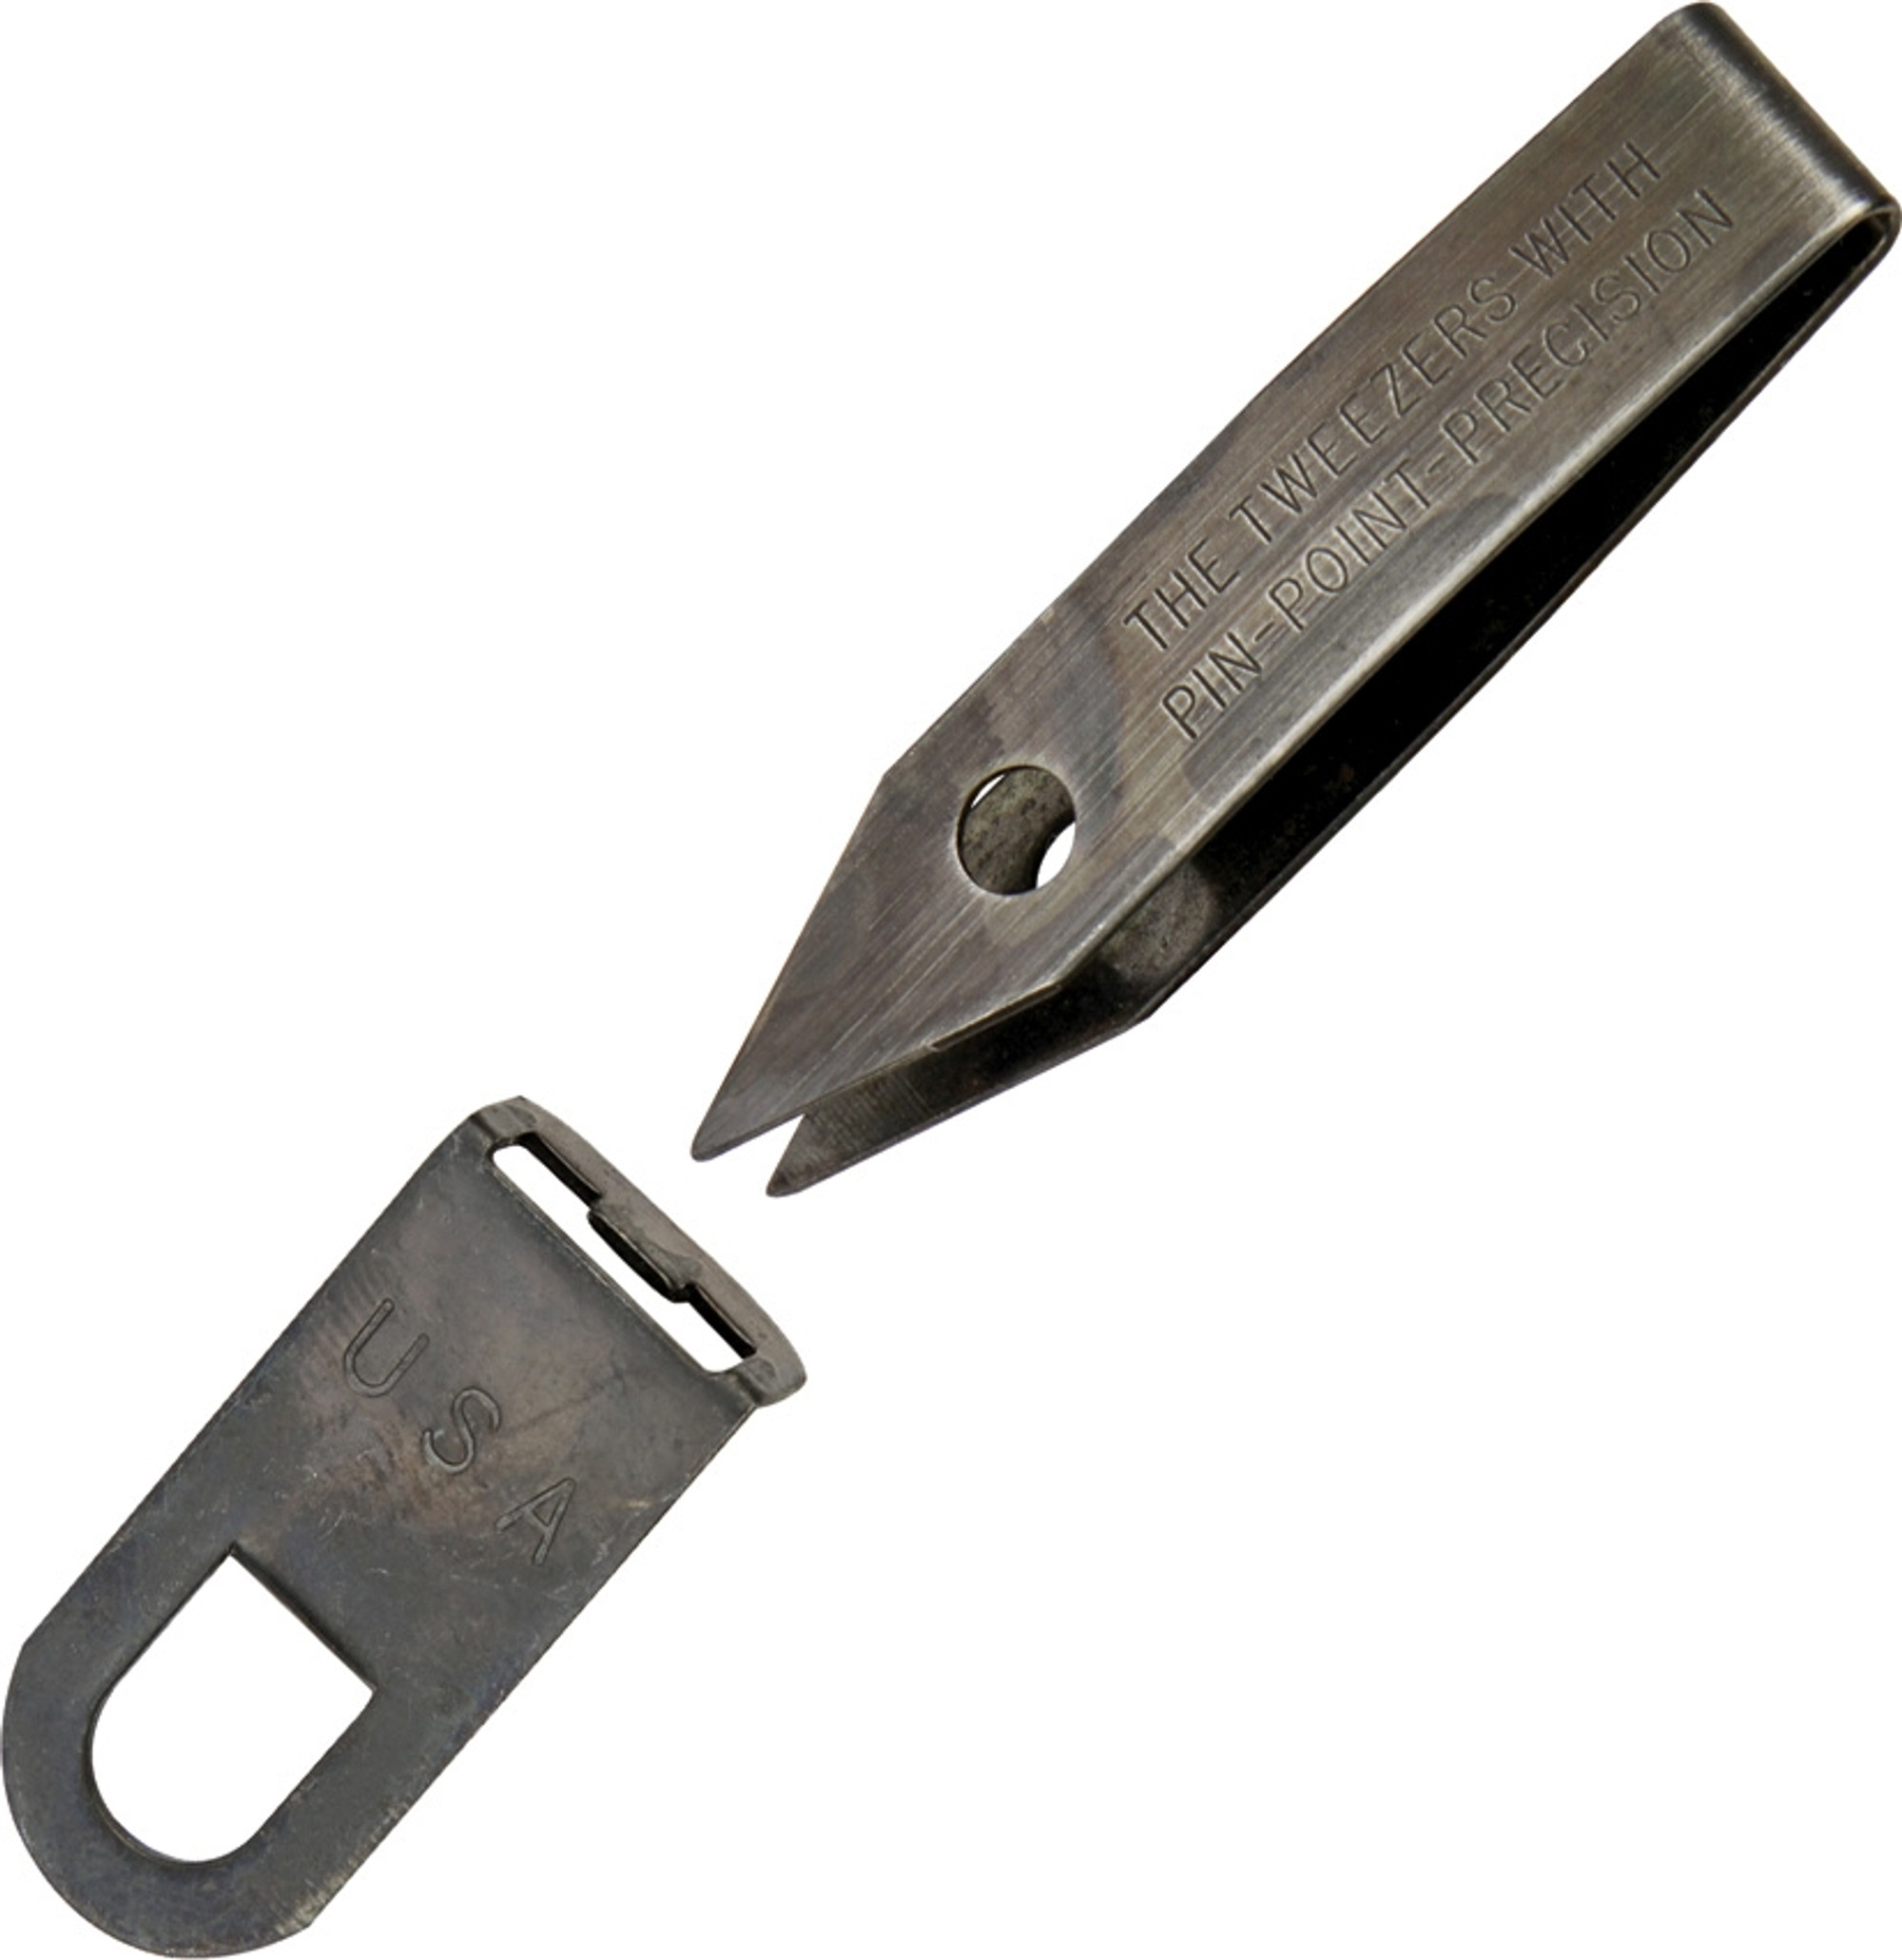 Uncle Bill's Silver Gripper Keychain Precision Tweezers- Black